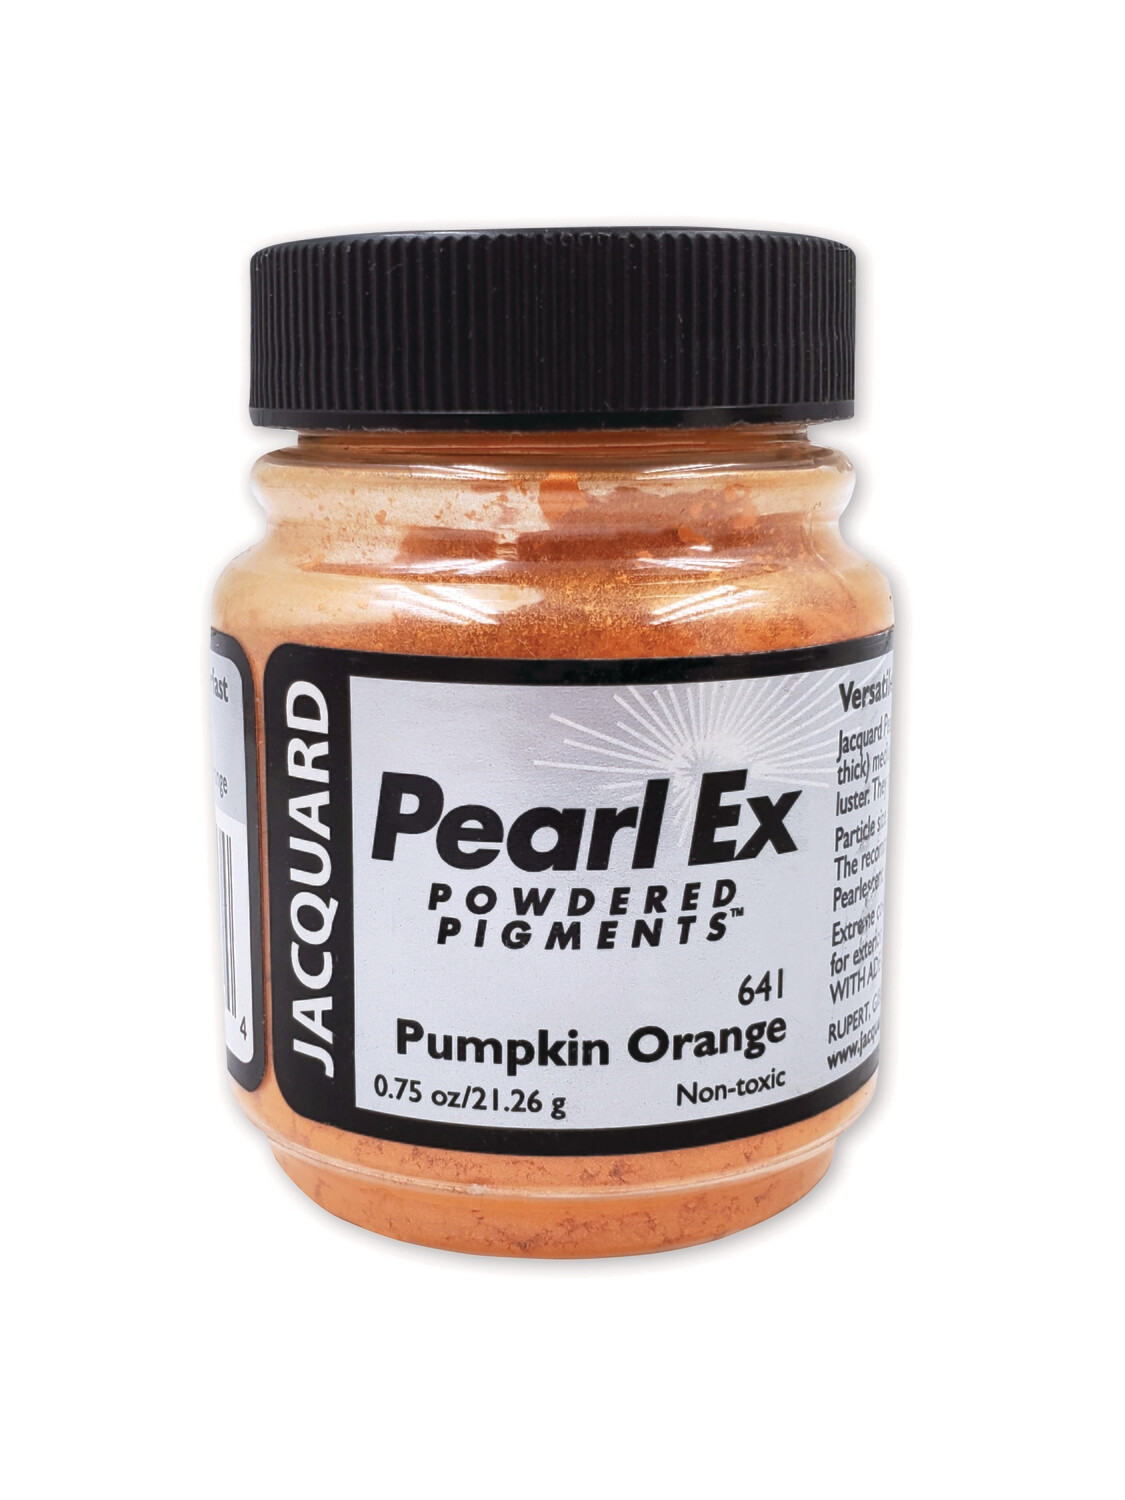 Pearl Ex Powdered Pigments-Pumpkin Orange